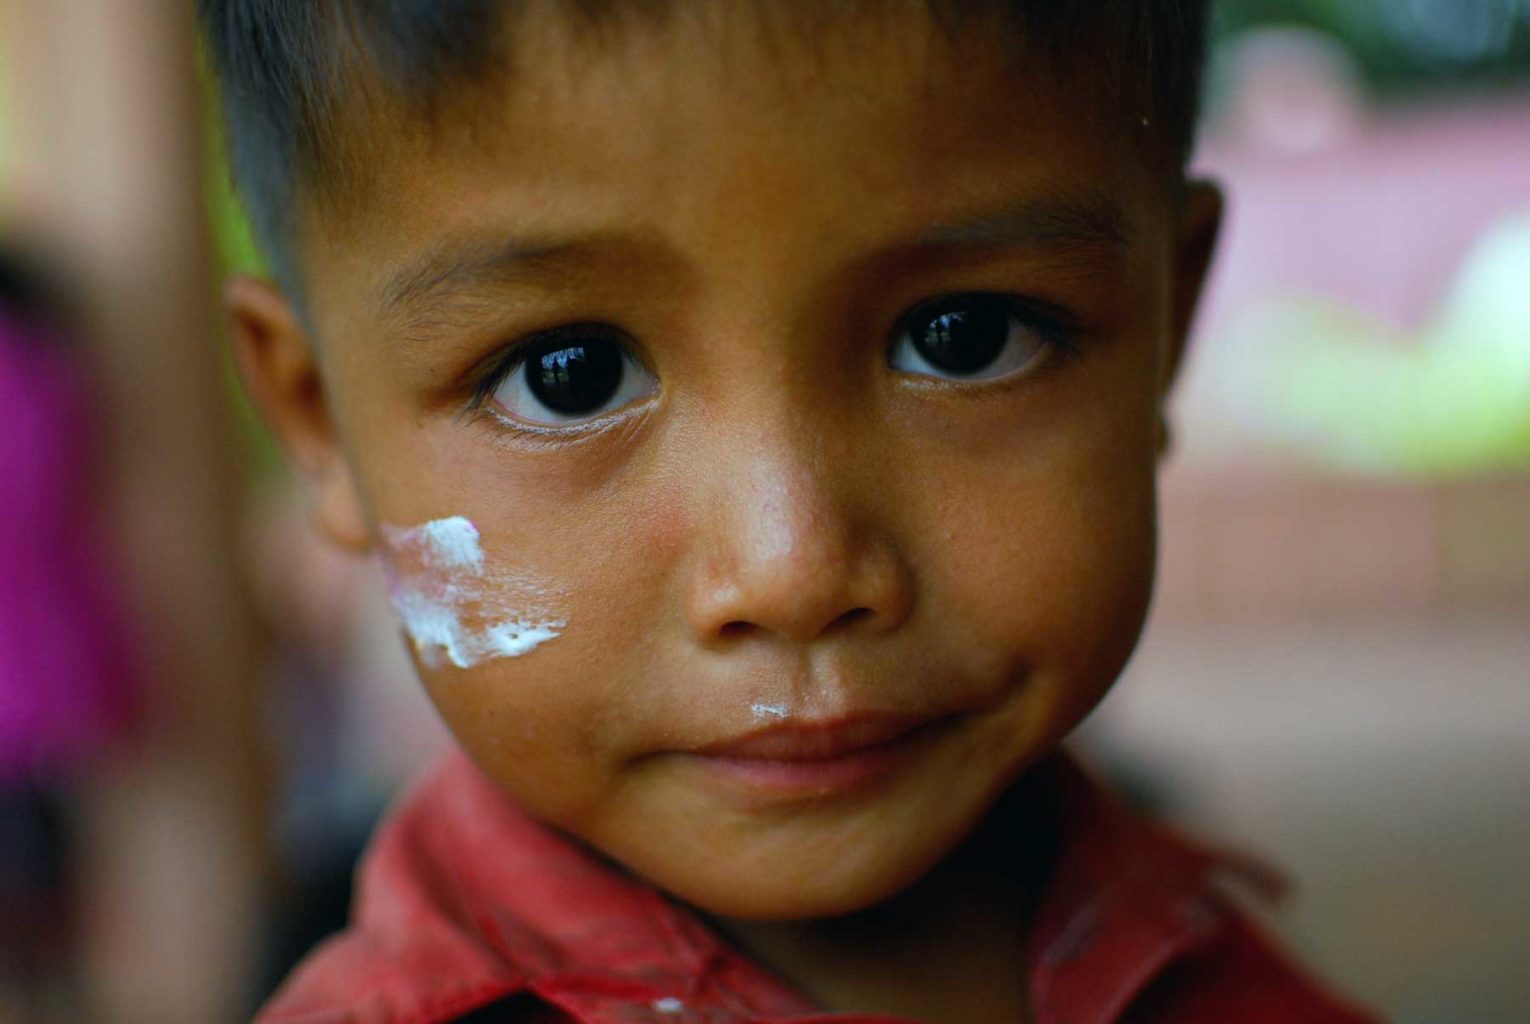 Little boy sponsoring child Cambodia orphans orphans of child abuse beautiful sad eyes humanitarian 